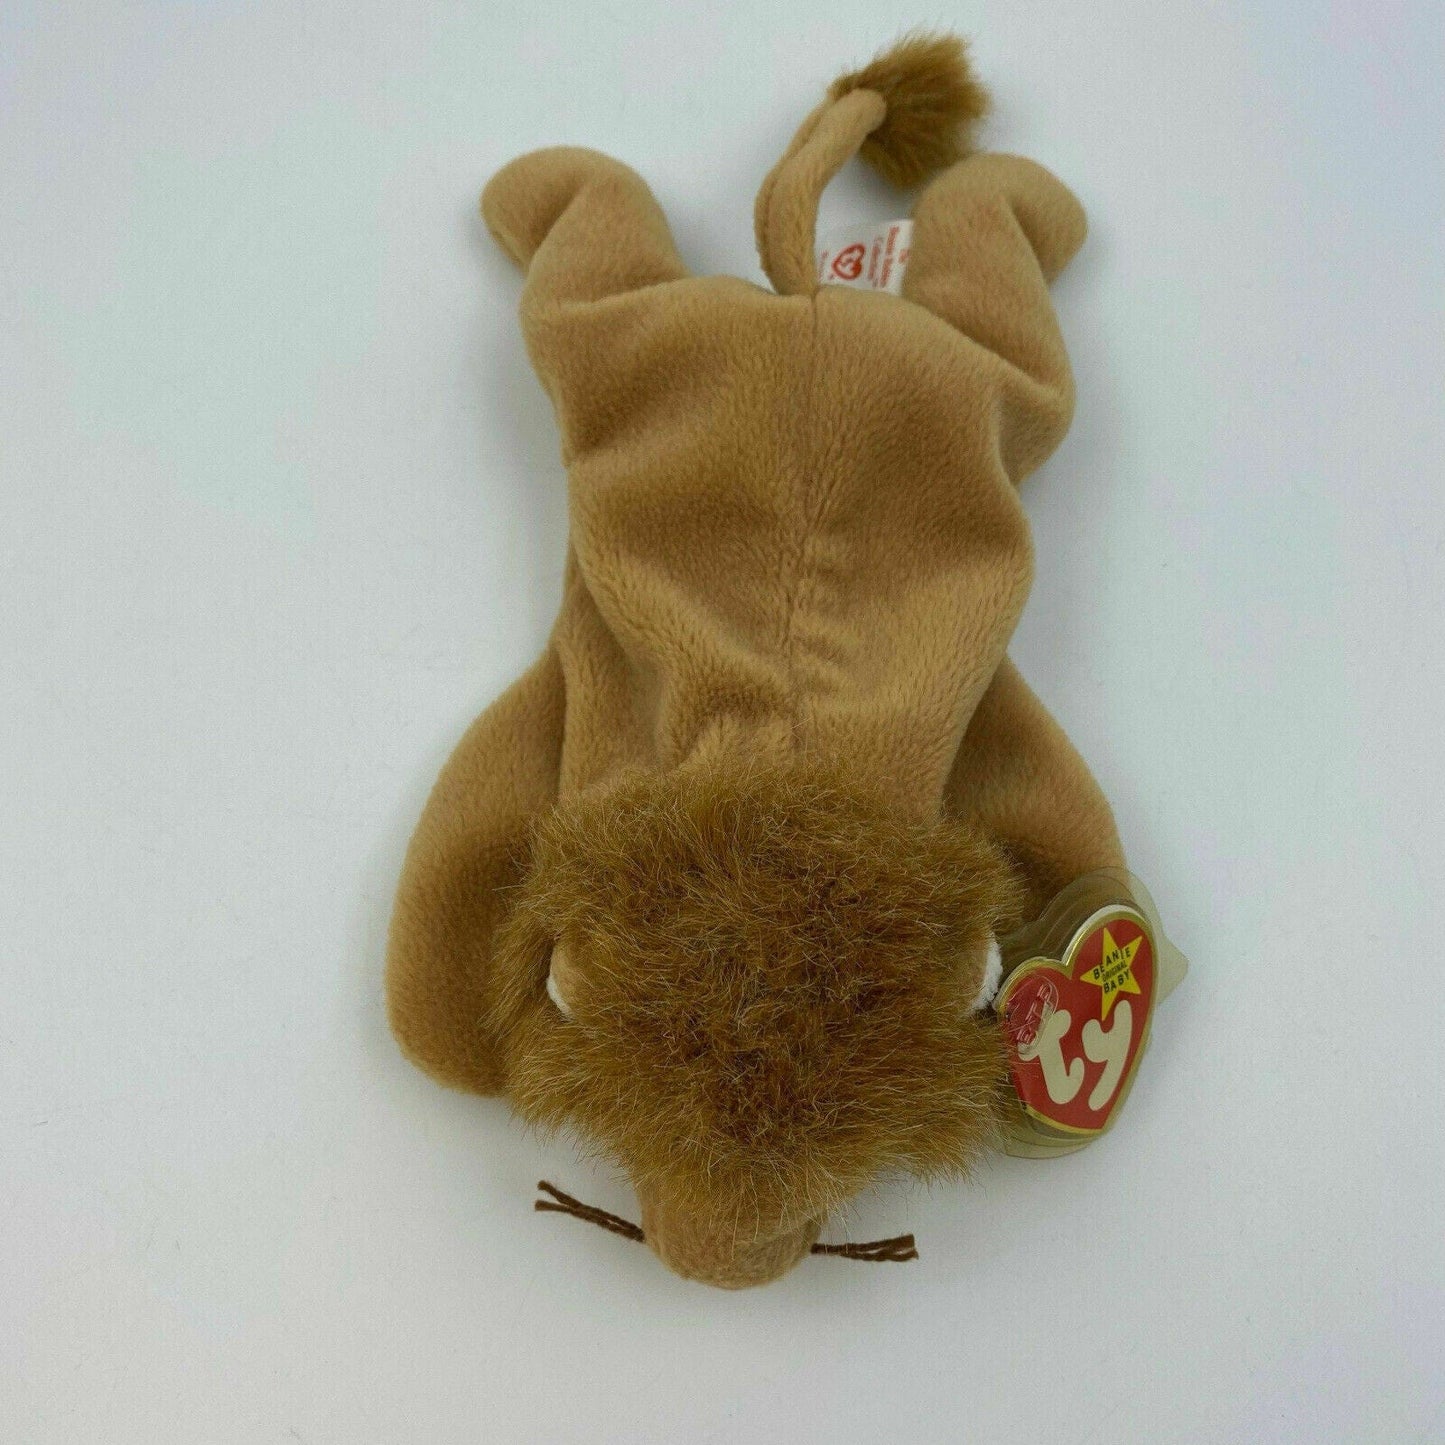 Nostalgic Ty Original Beanie Babies Roary The Lion Plush Toy Excellent Cond. 1996